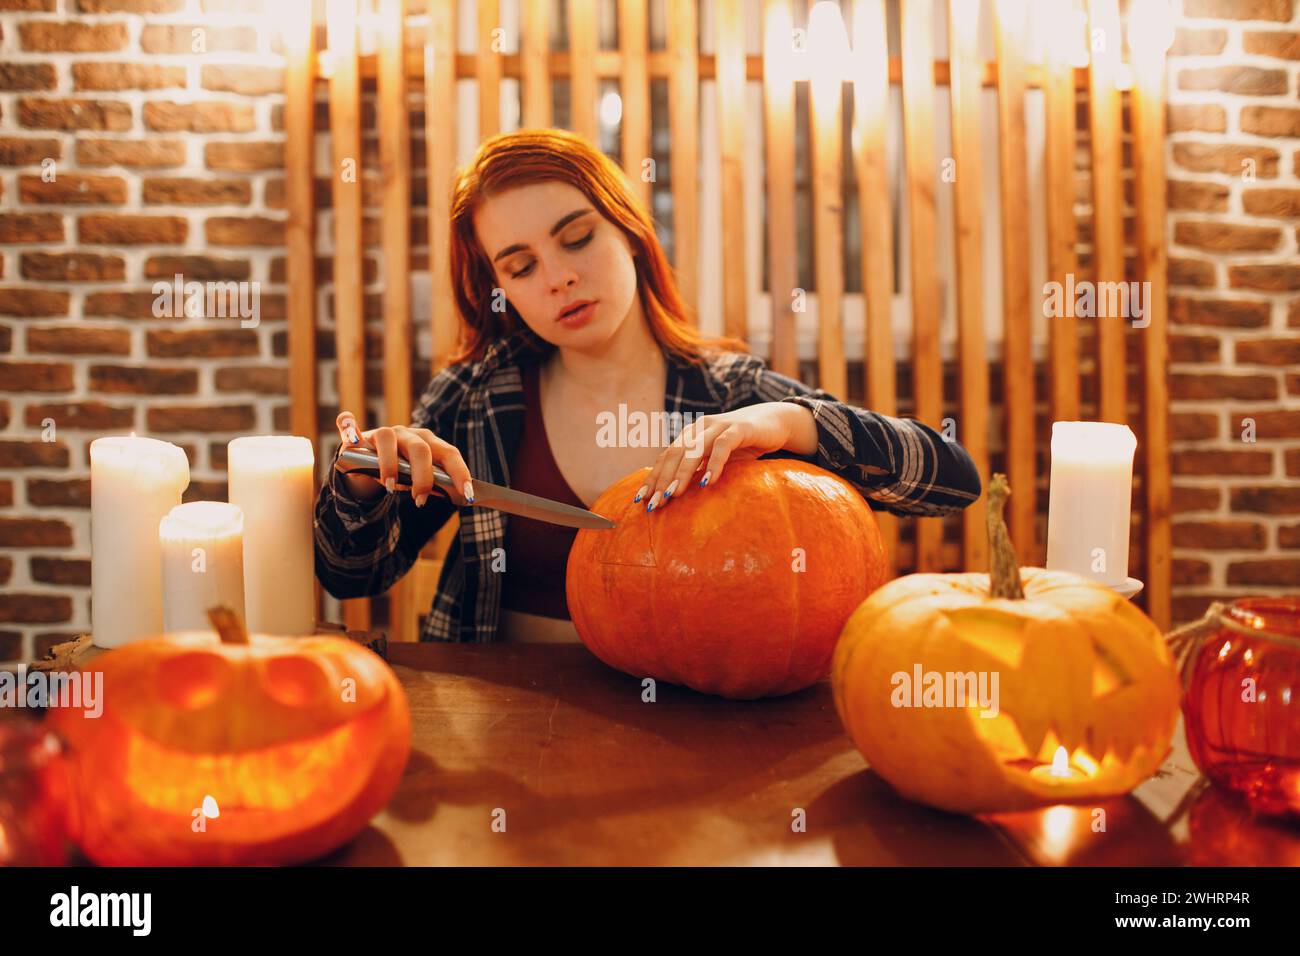 Young woman making Halloween pumpkin Jack-o-lantern. Female hands cutting pumpkins with knife. Stock Photo